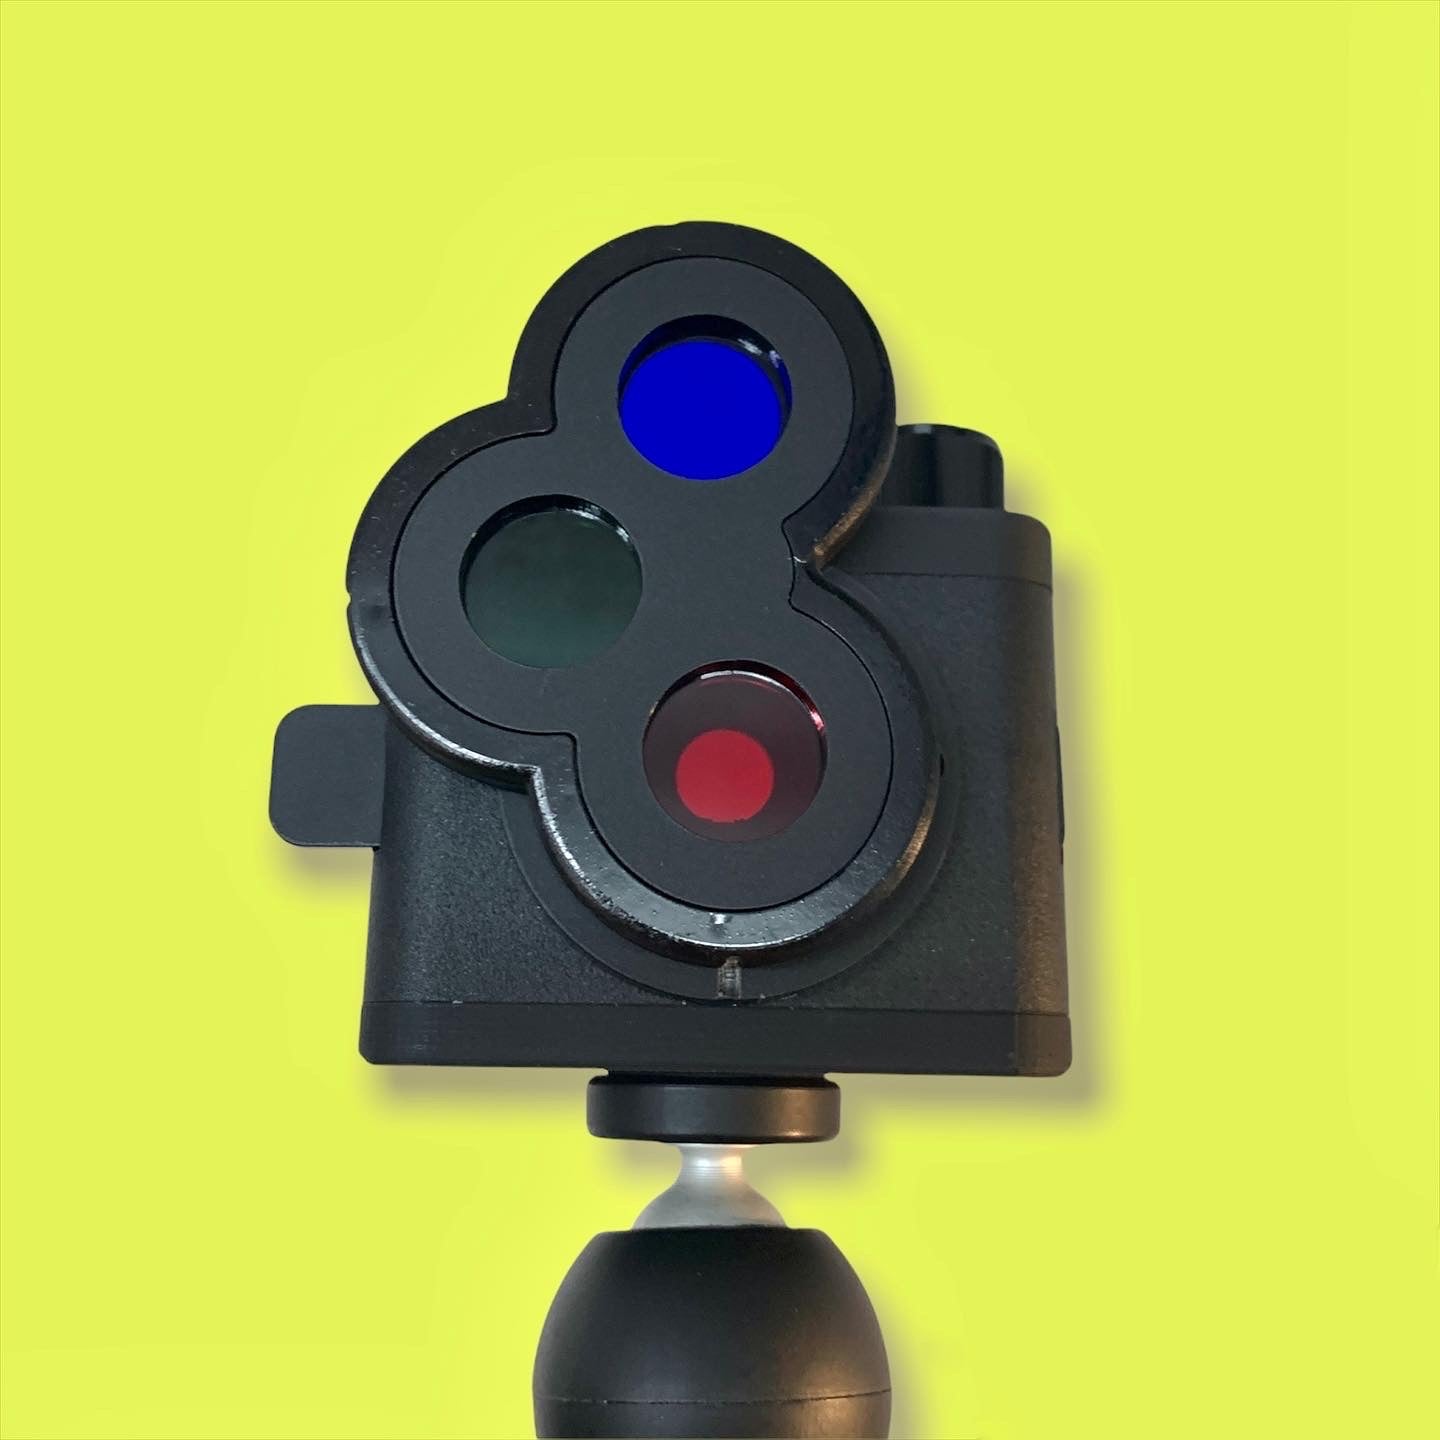 "TriChroma" - Magnetic TriChrome filter adaptor for Cube Pinhole Cameras